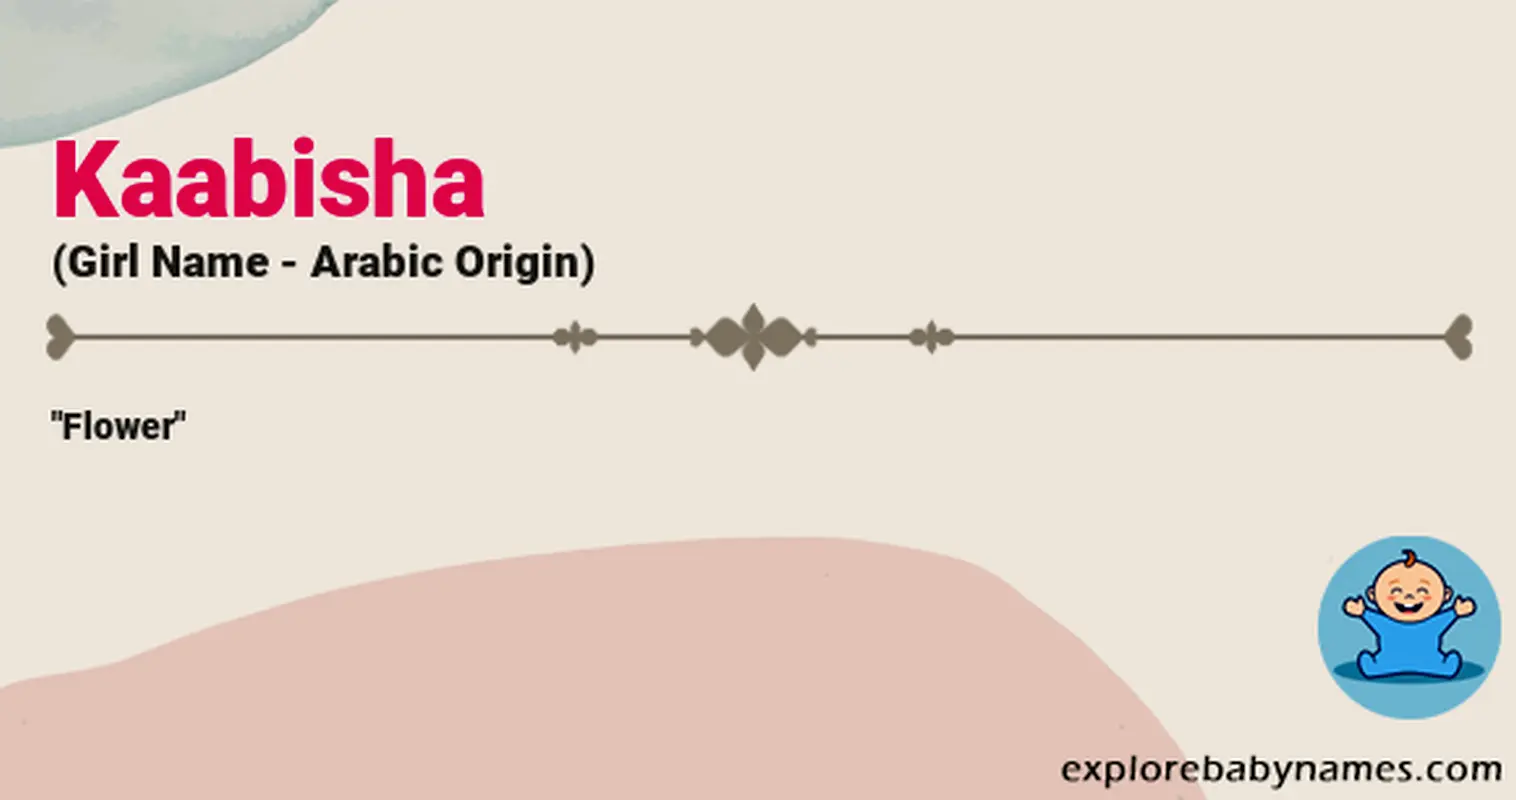 Meaning of Kaabisha